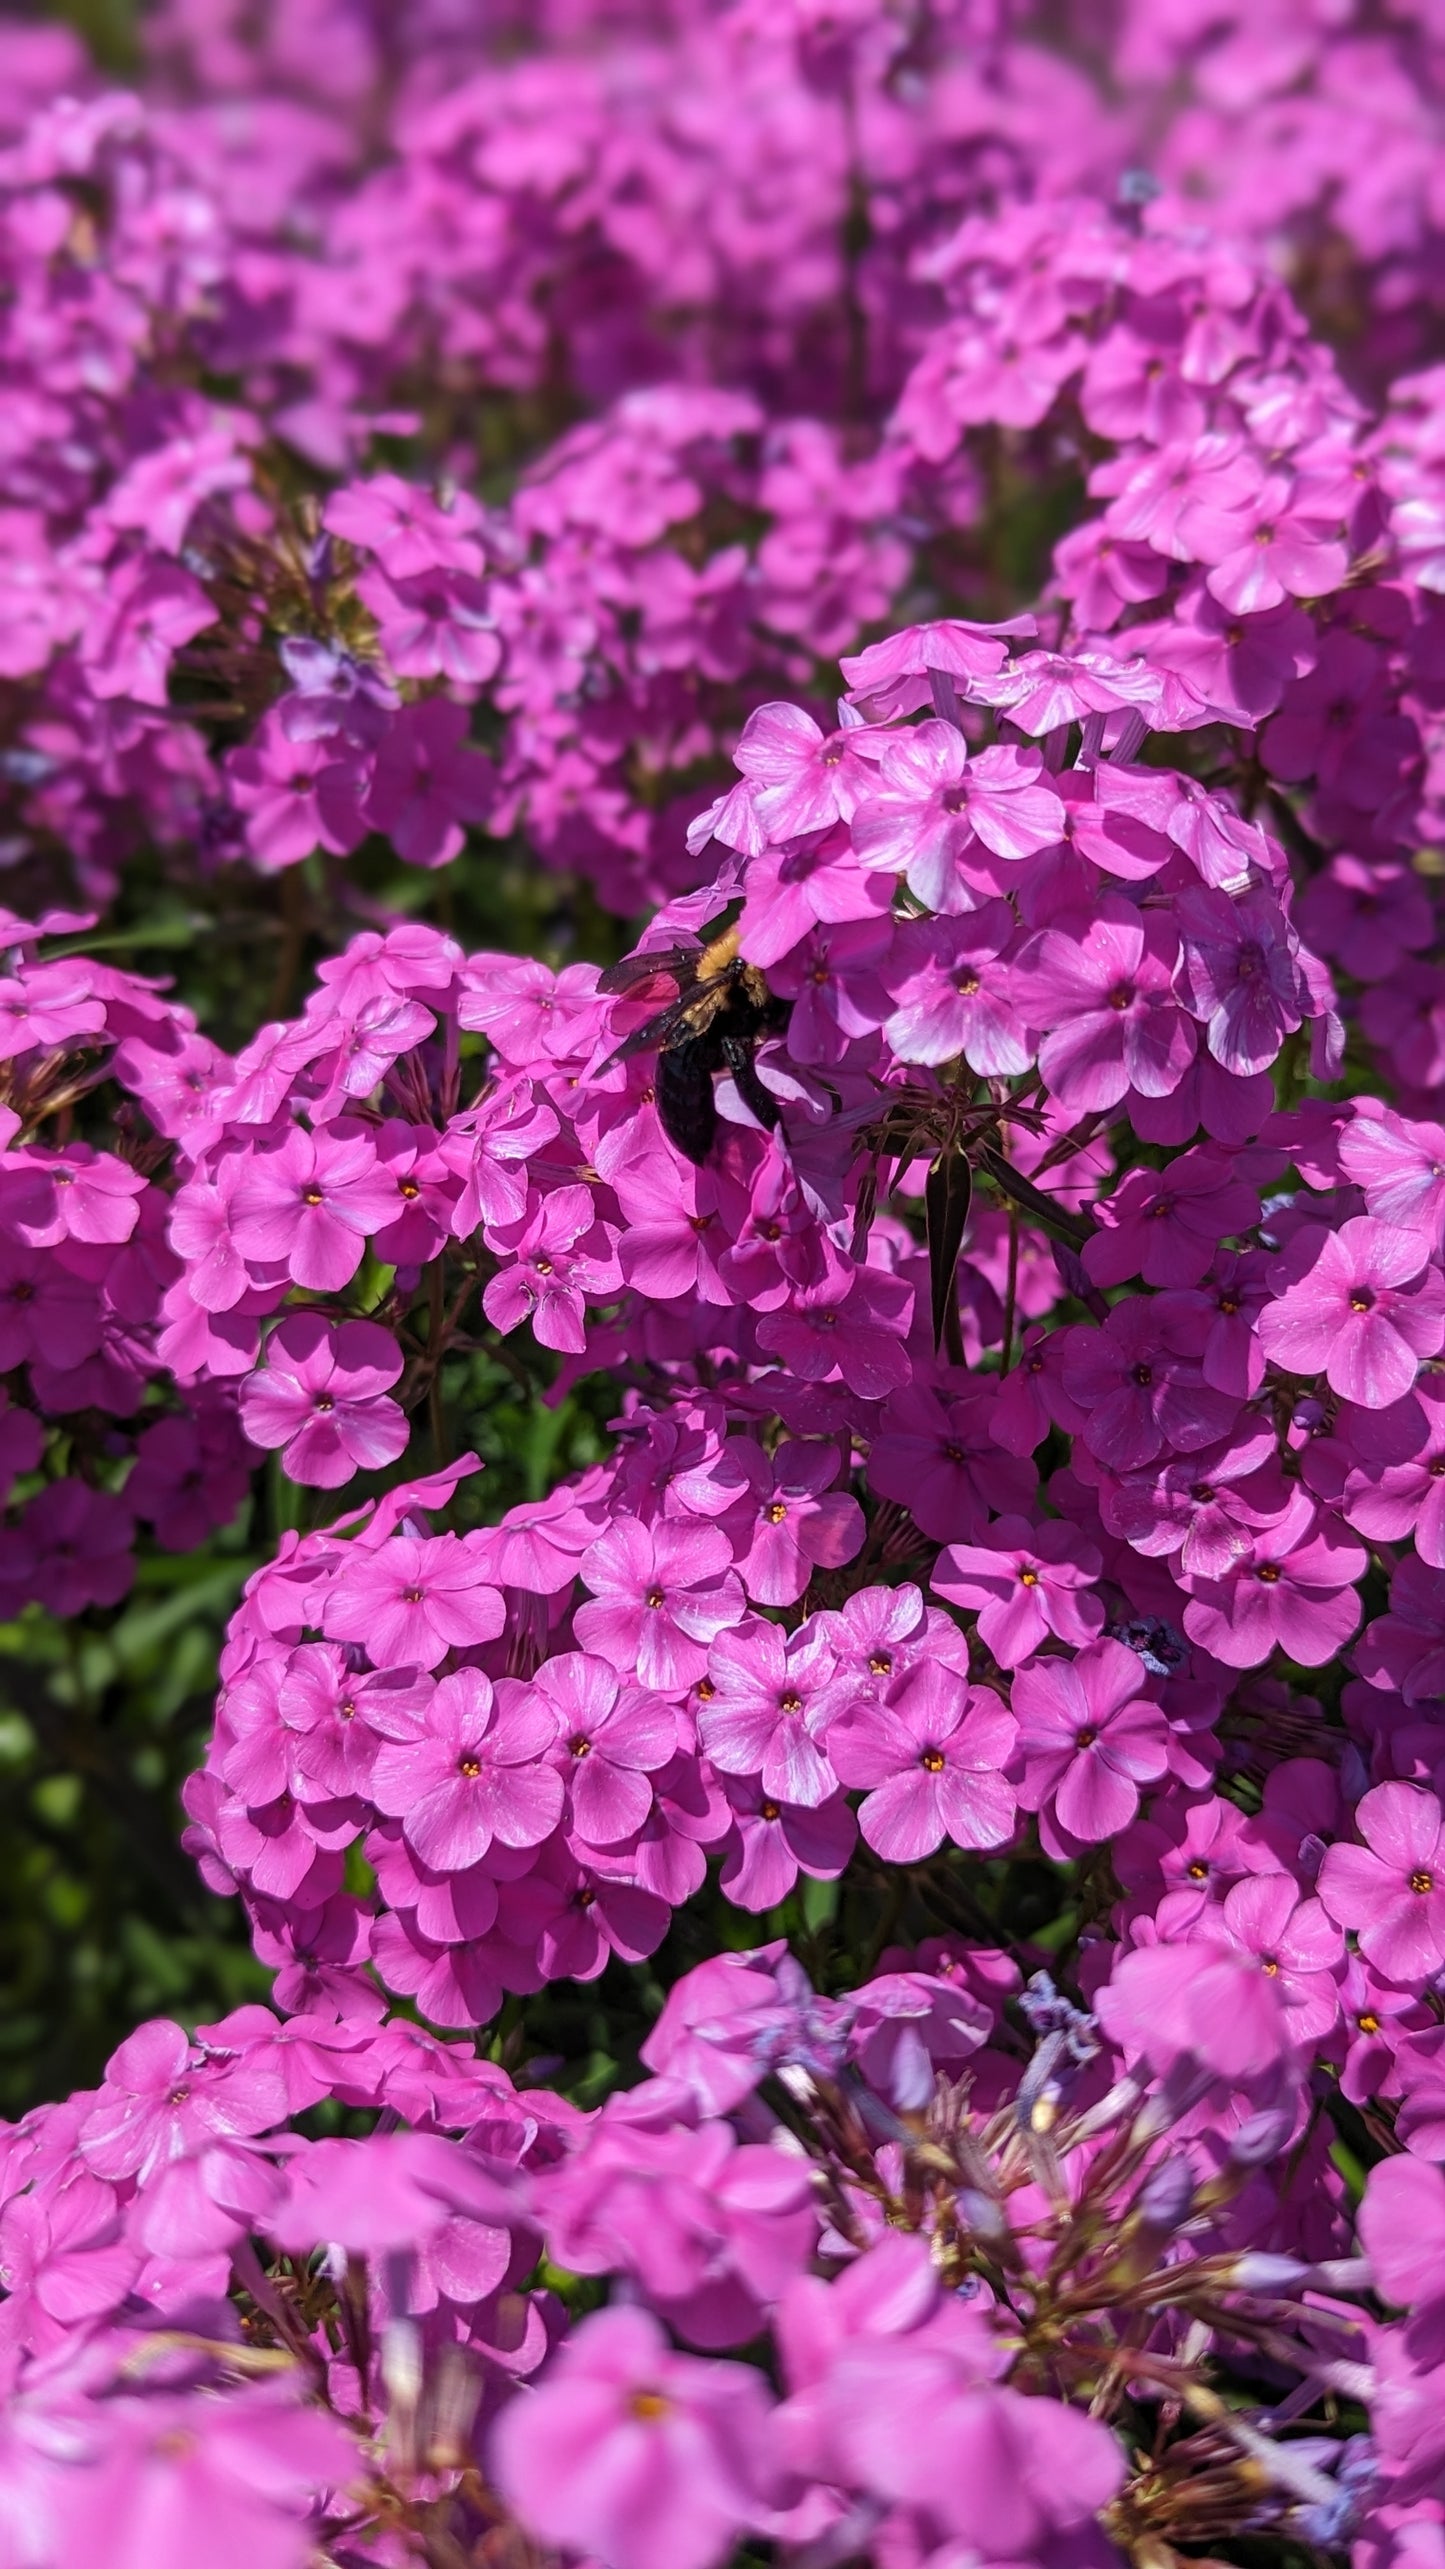 Phlox glaberrima - Marsh Phlox Flowers with Bee